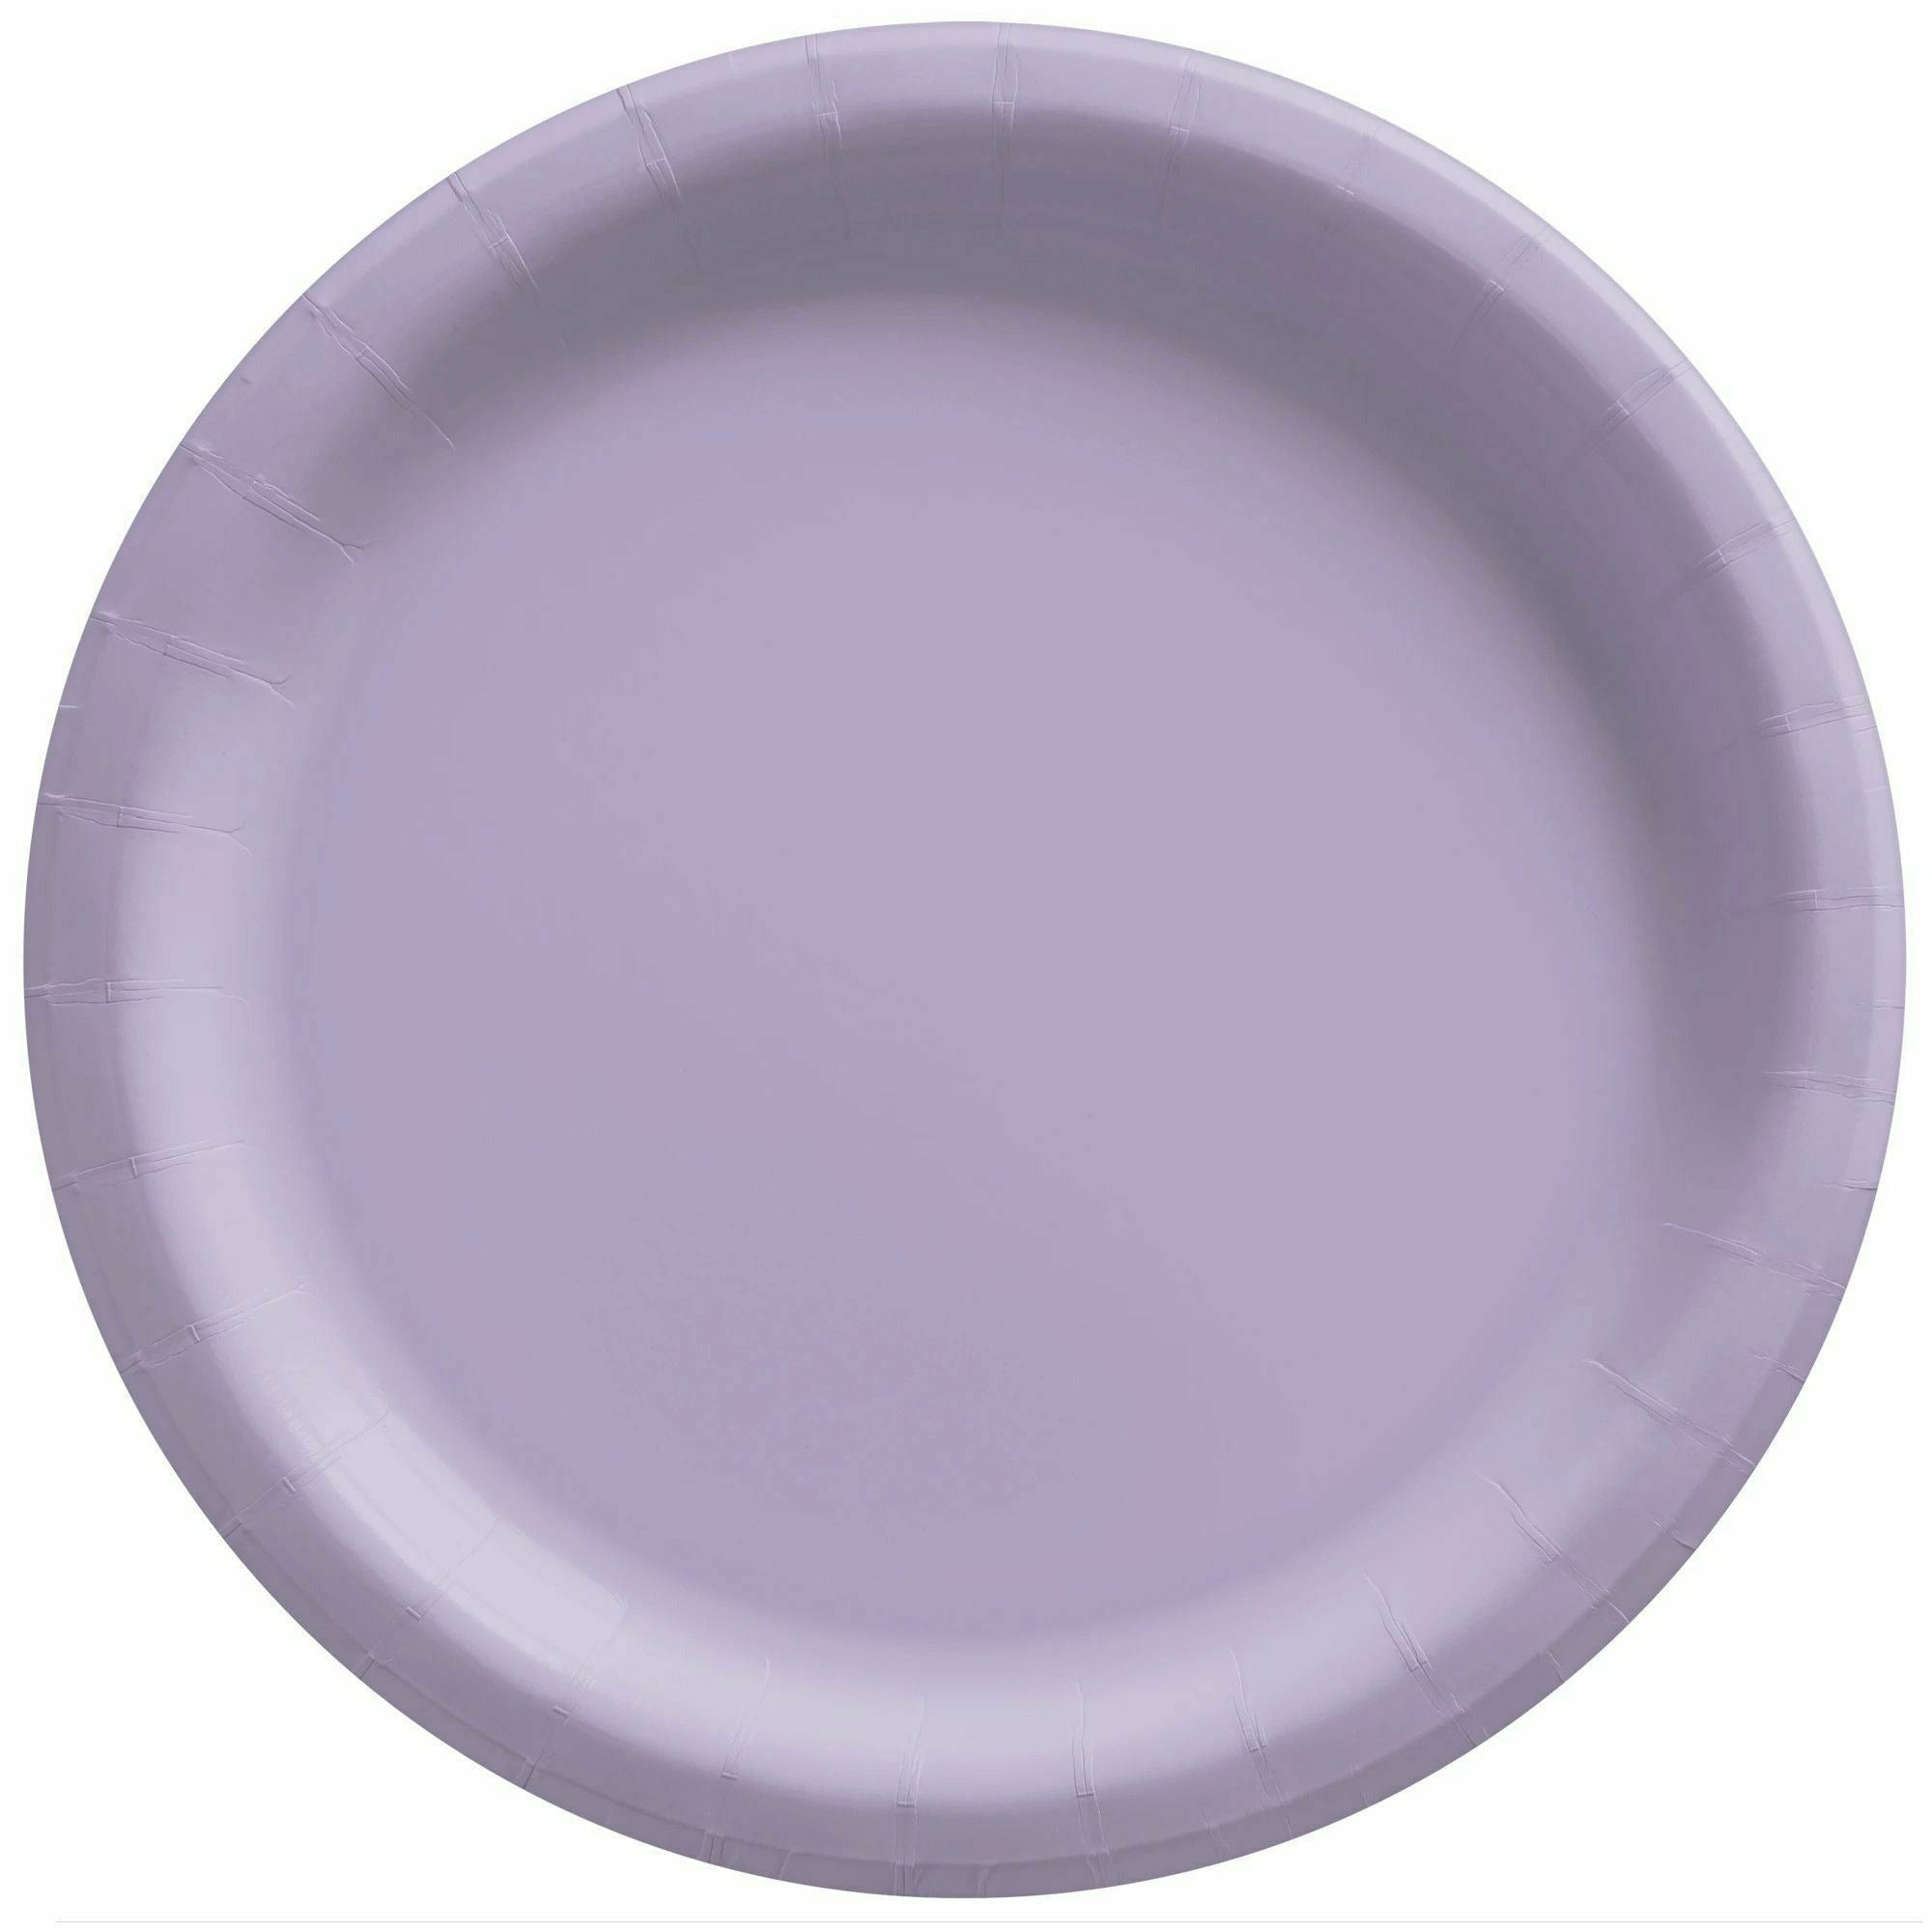 Amscan BASIC Lavender - 6 3/4" Round Paper Plates, 50 Ct.